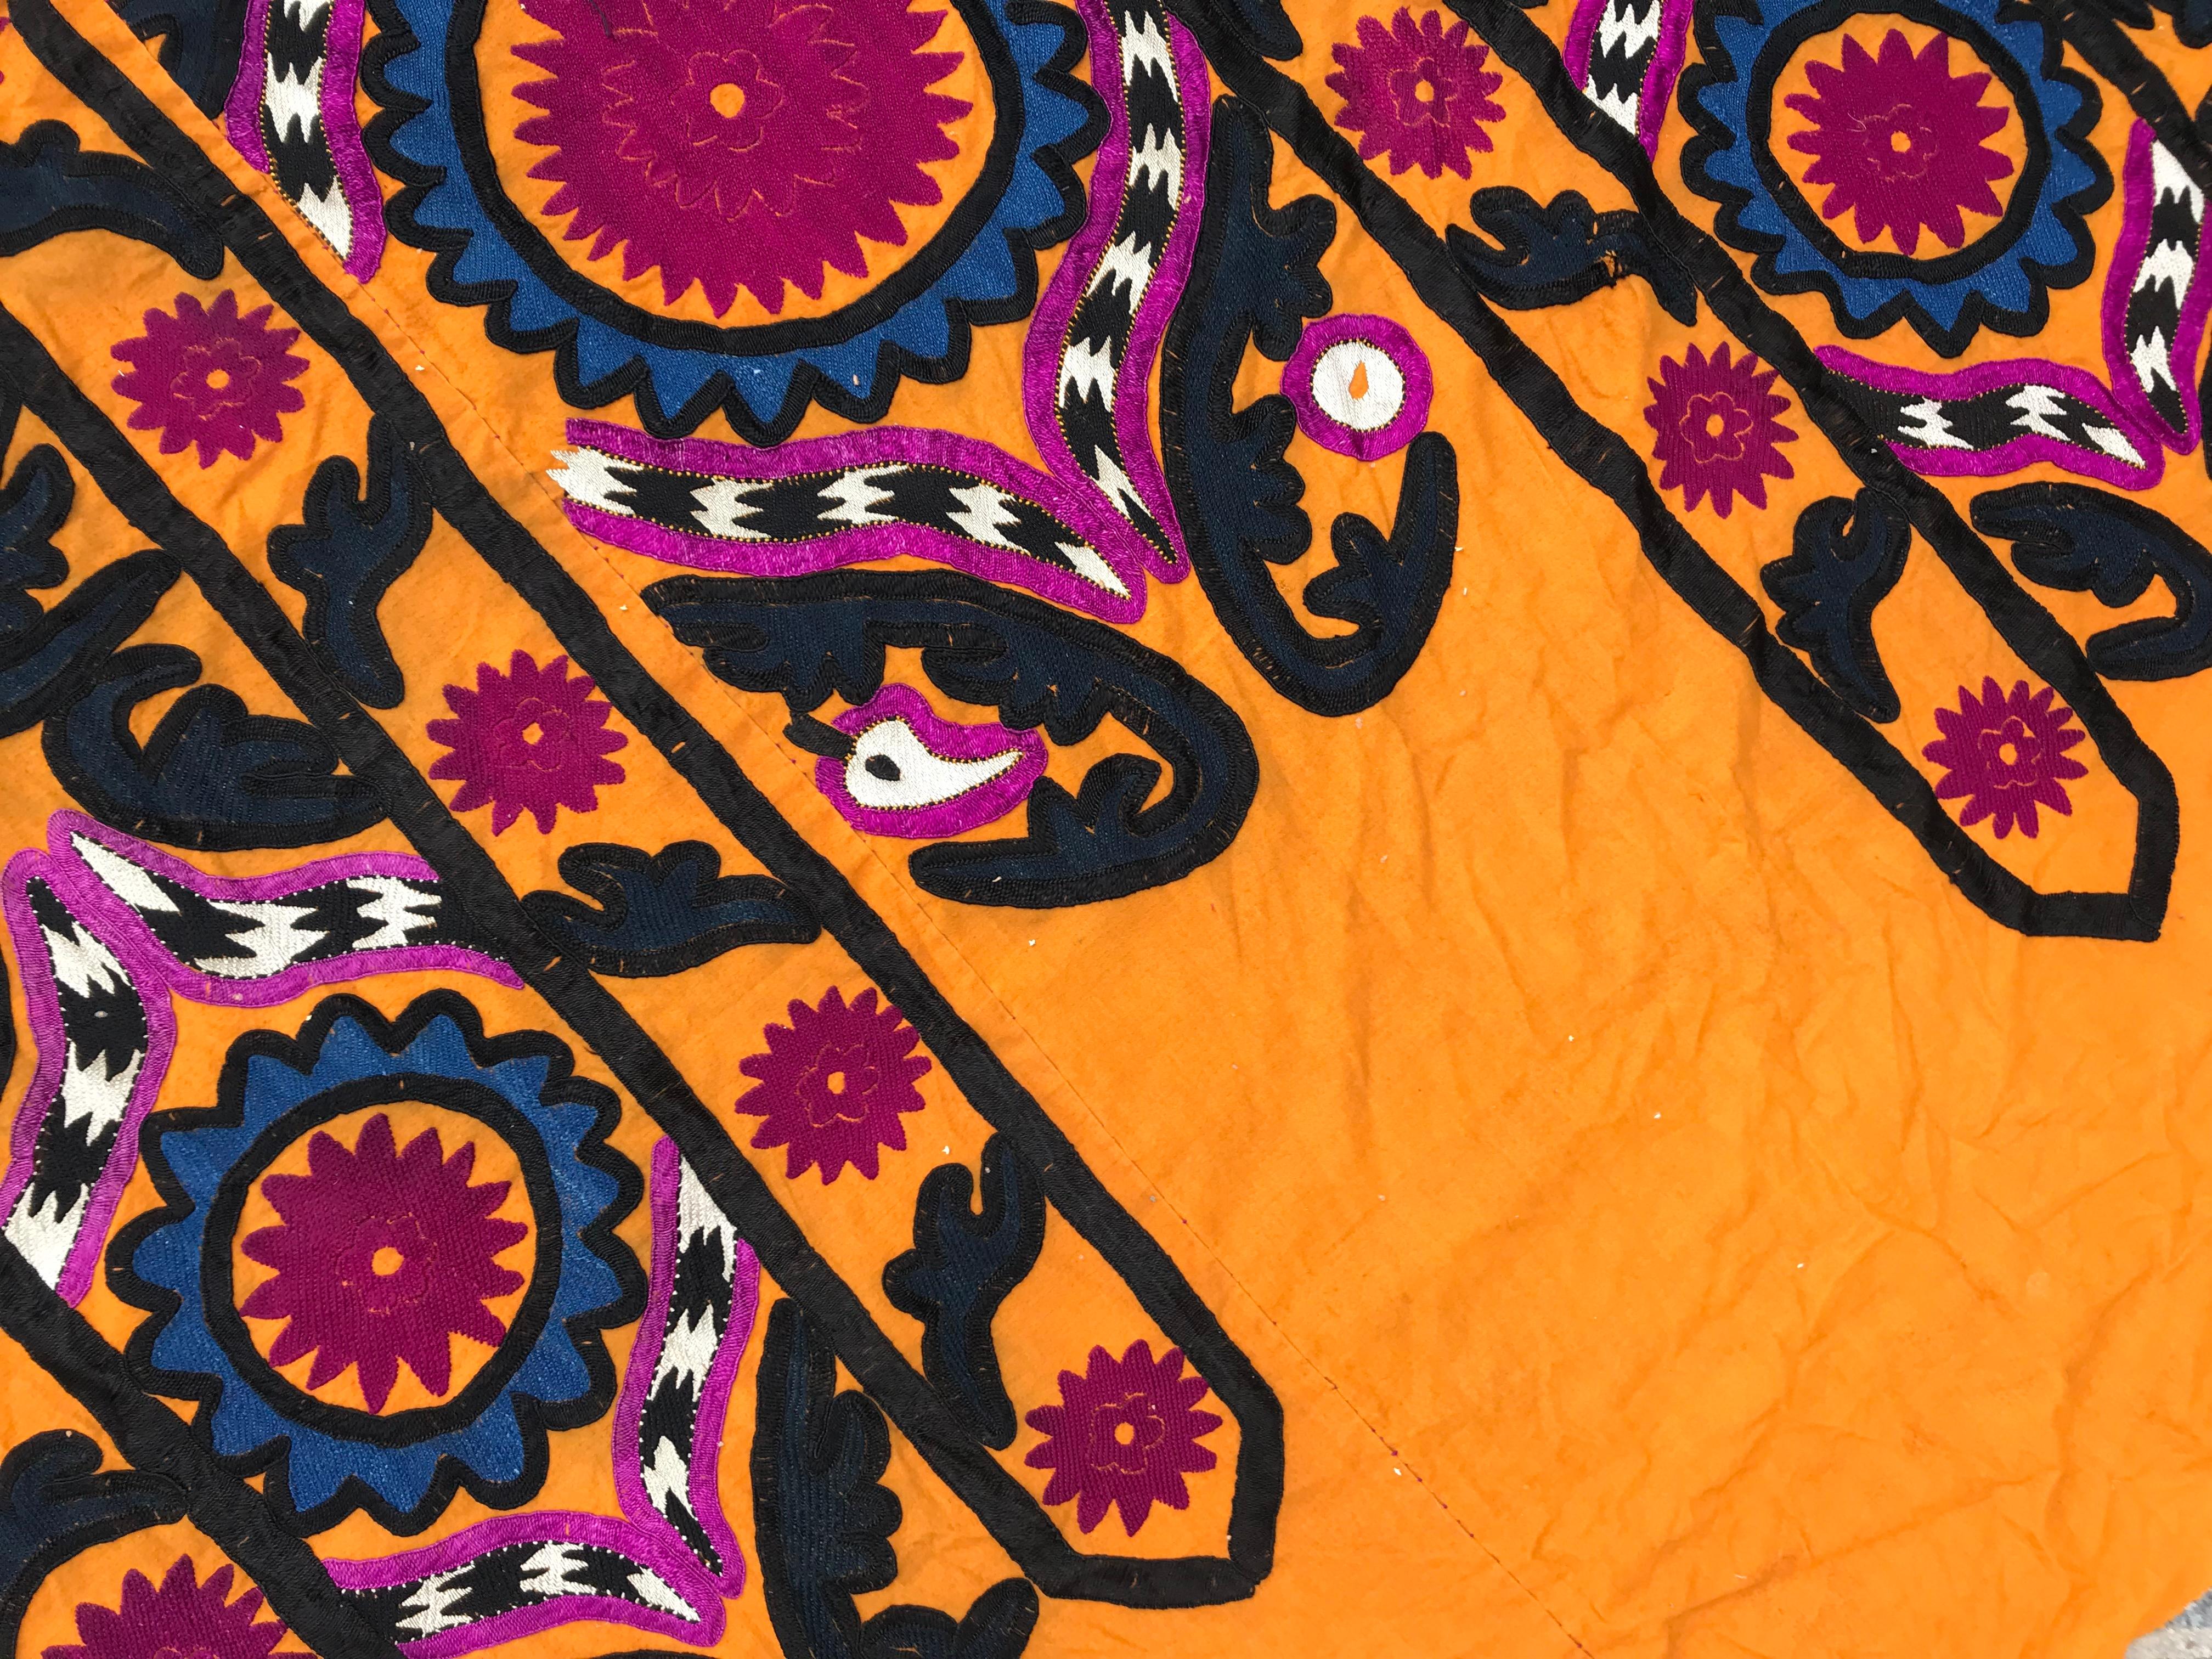 Silk Antique Uzbek Suzani Embroidery For Sale